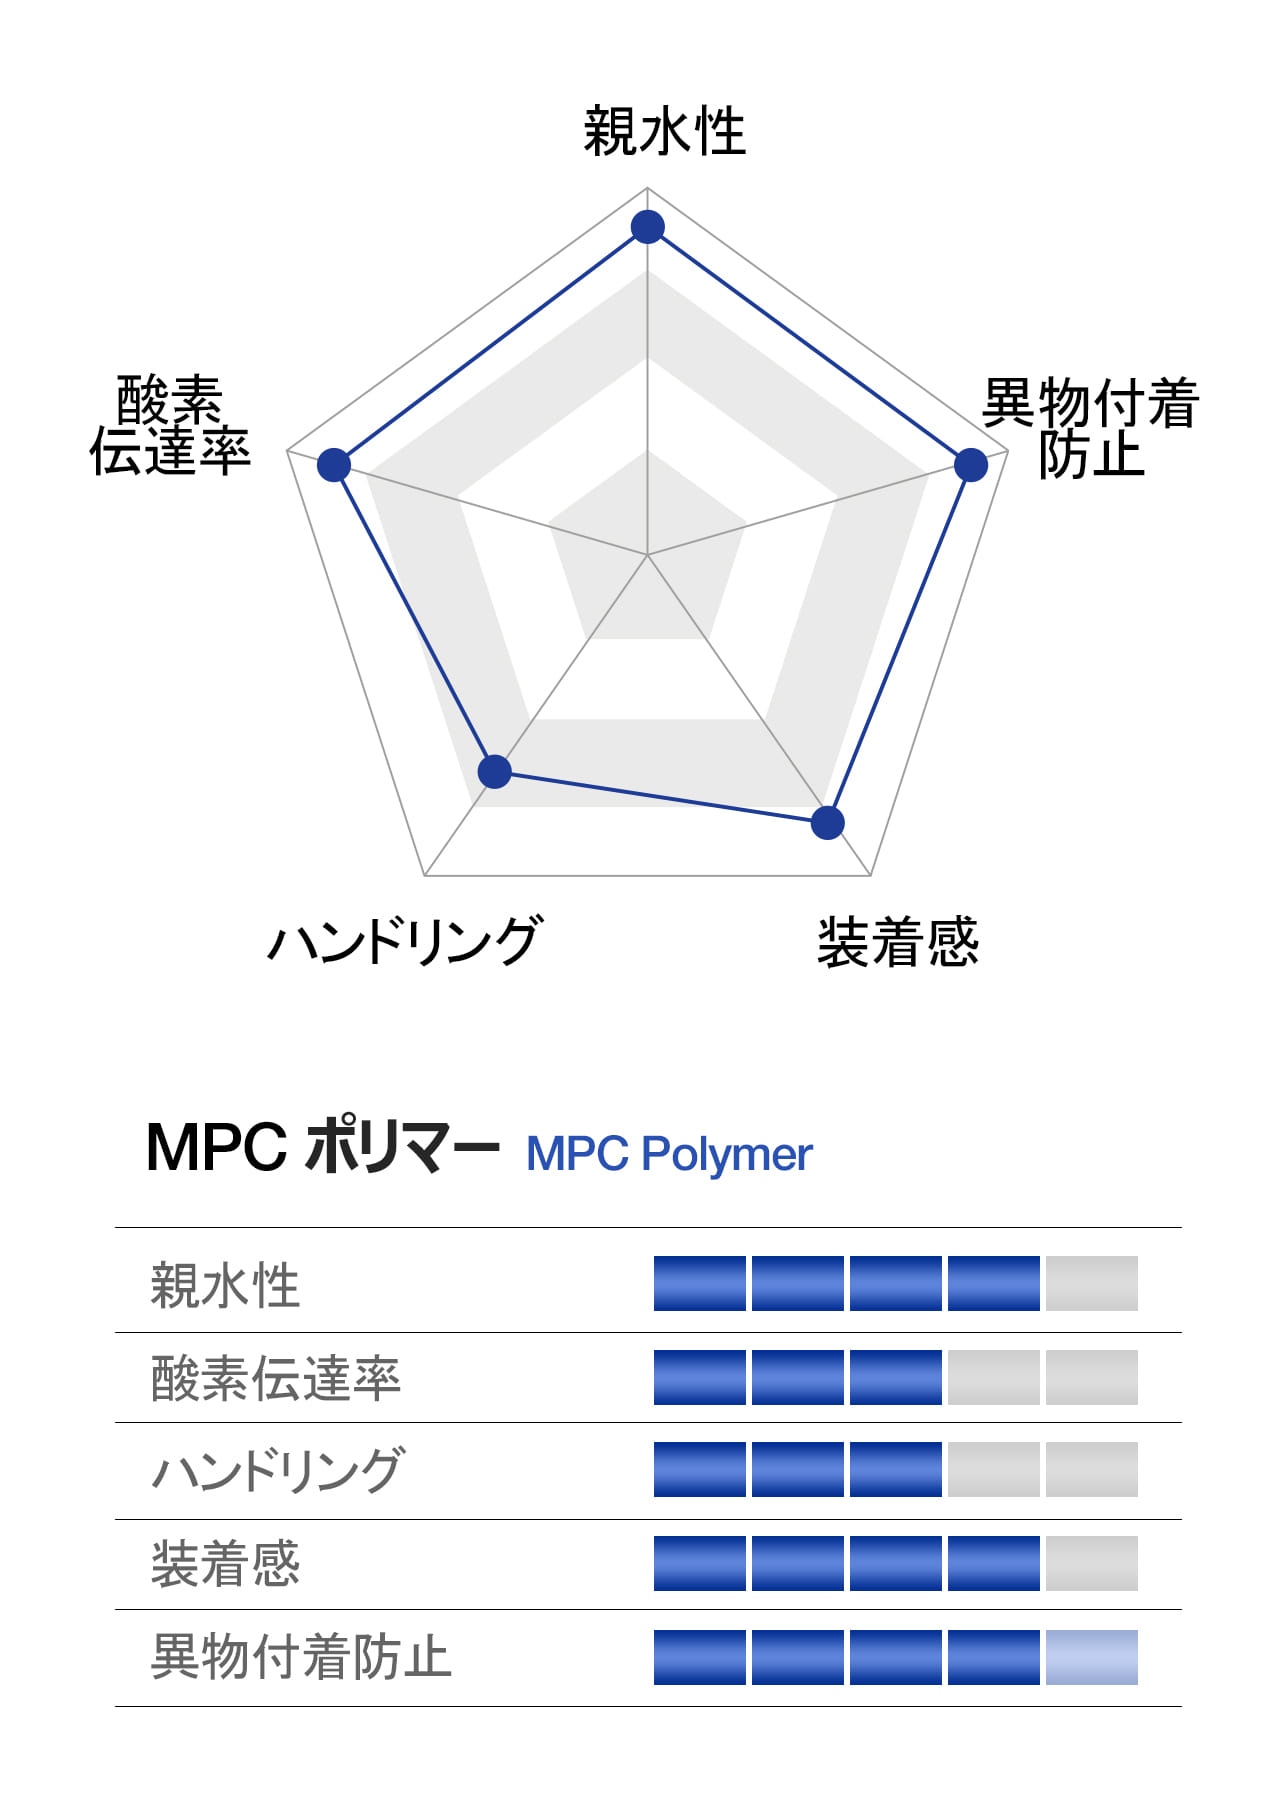 characteristics graph of MPC